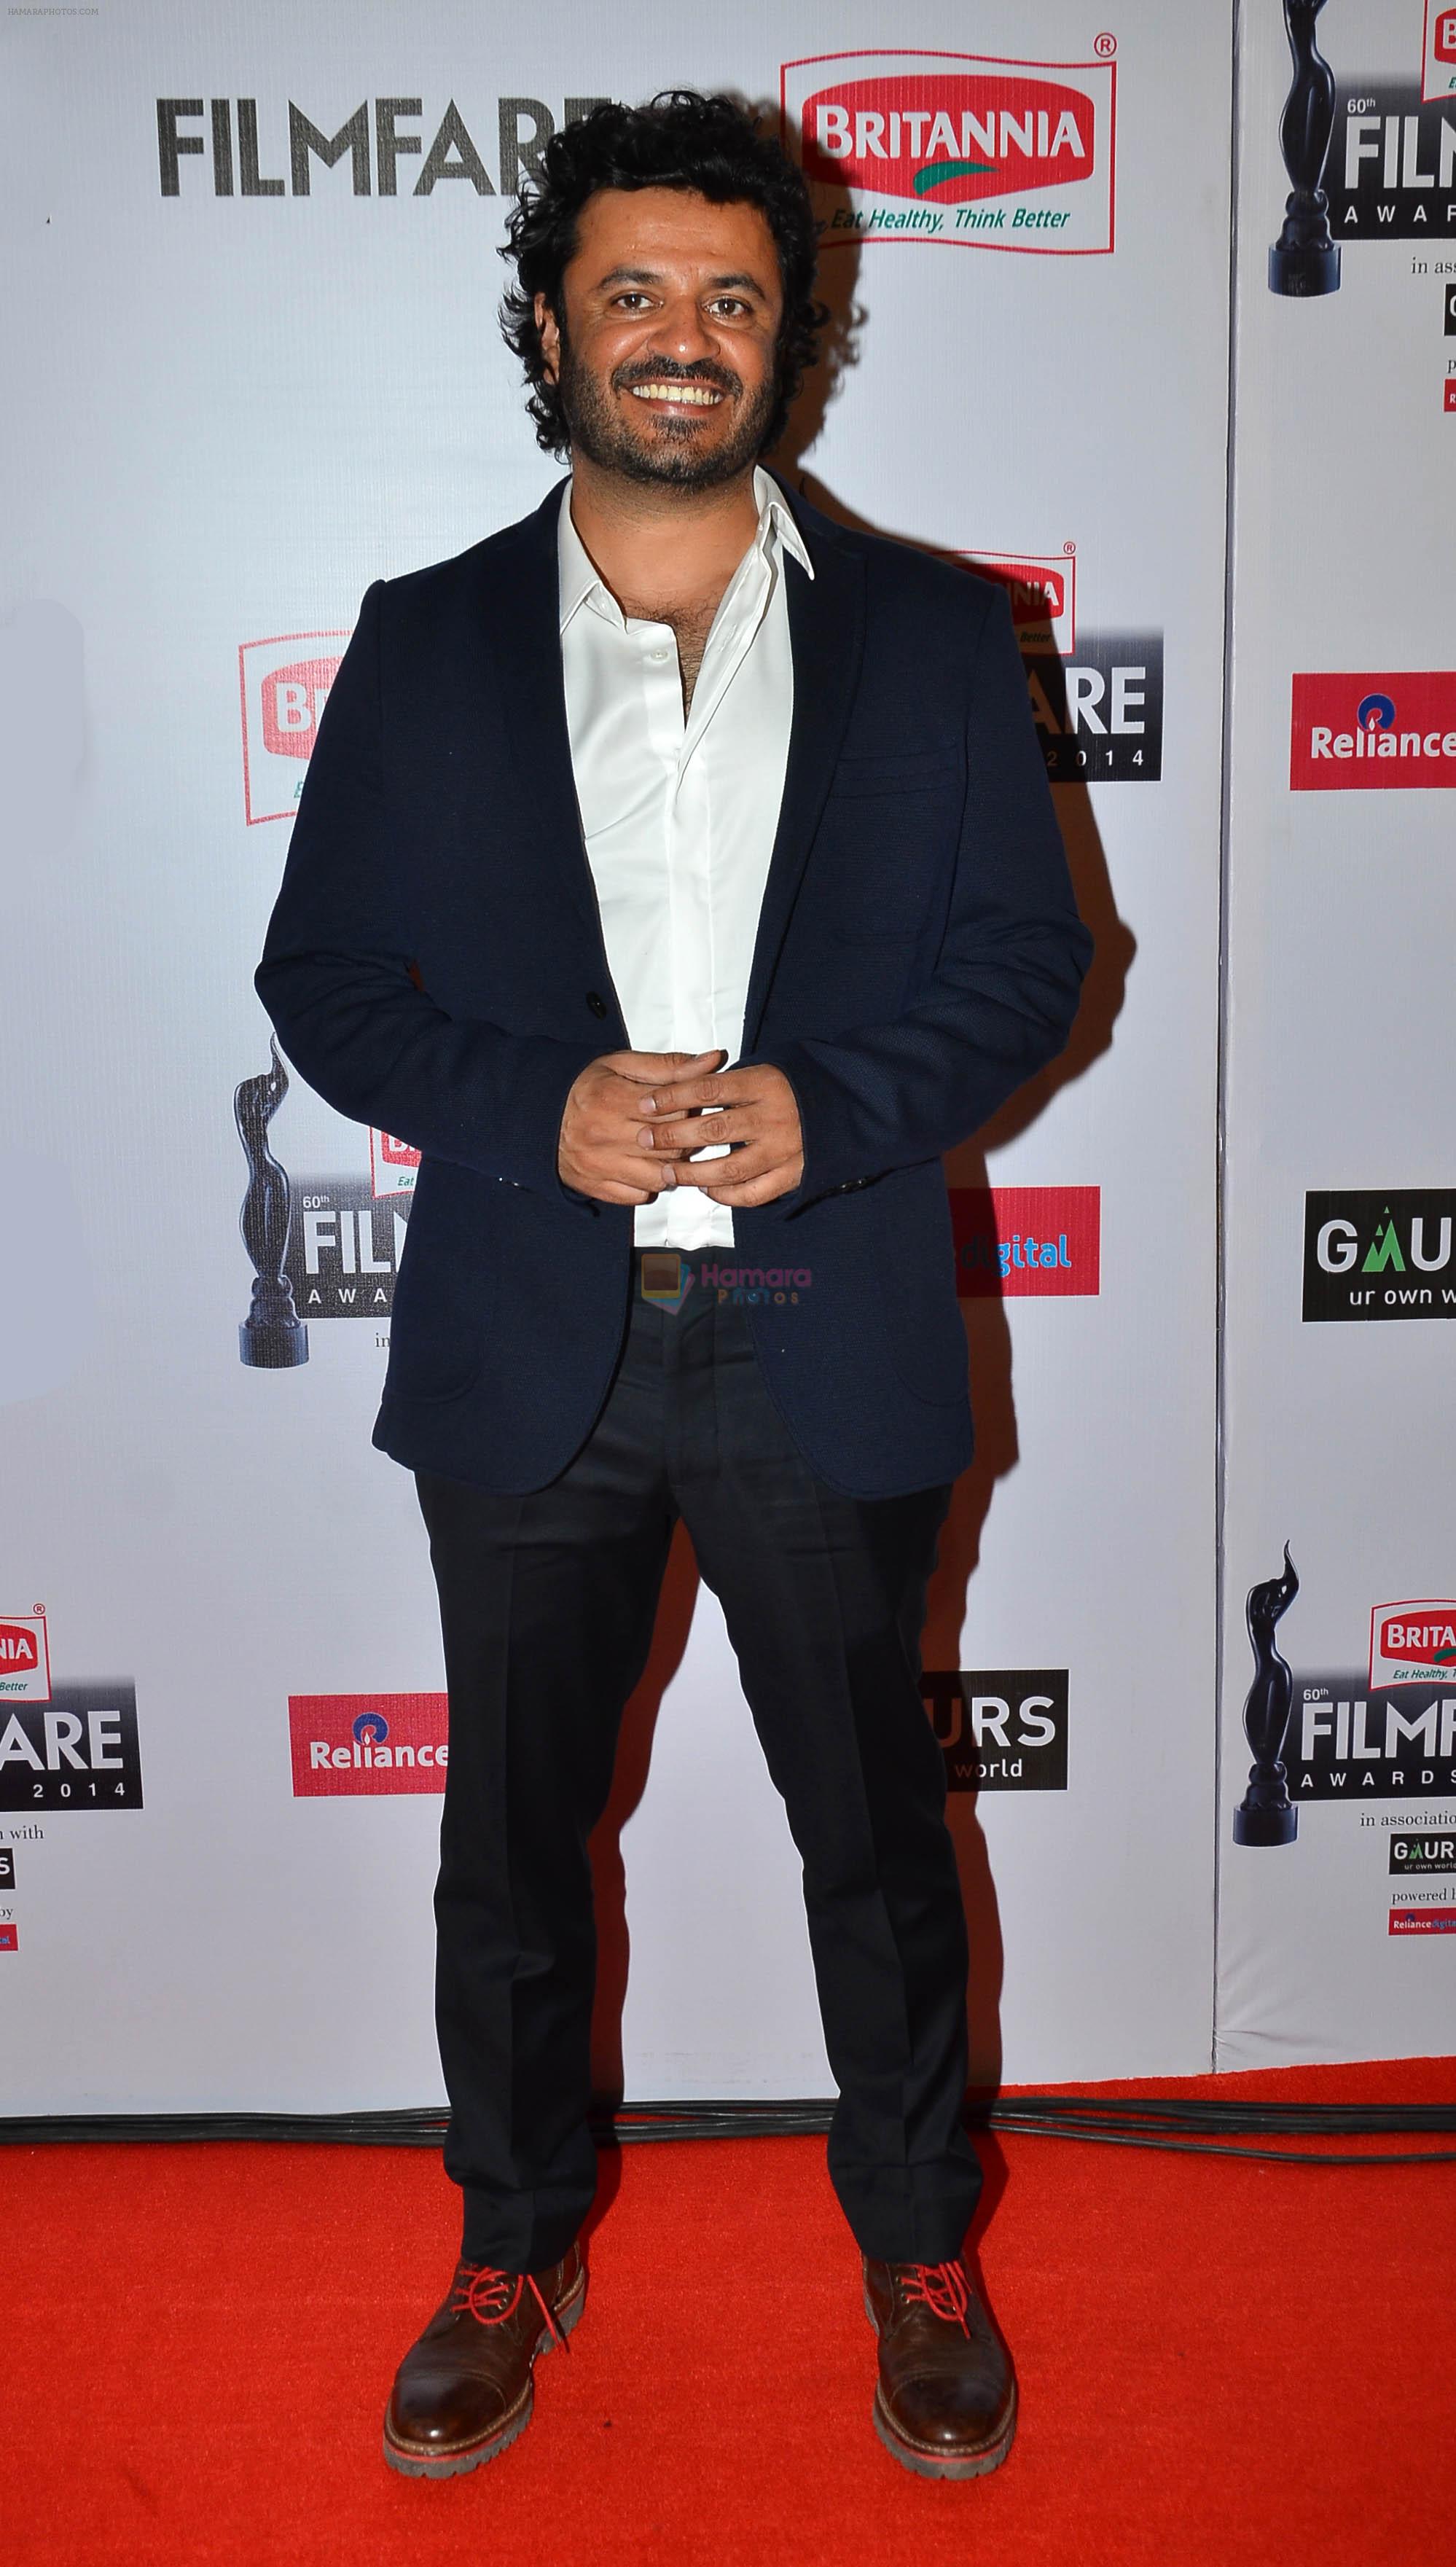 Vikas Bhal graces the red carpet at the 60th Britannia Filmfare Awards